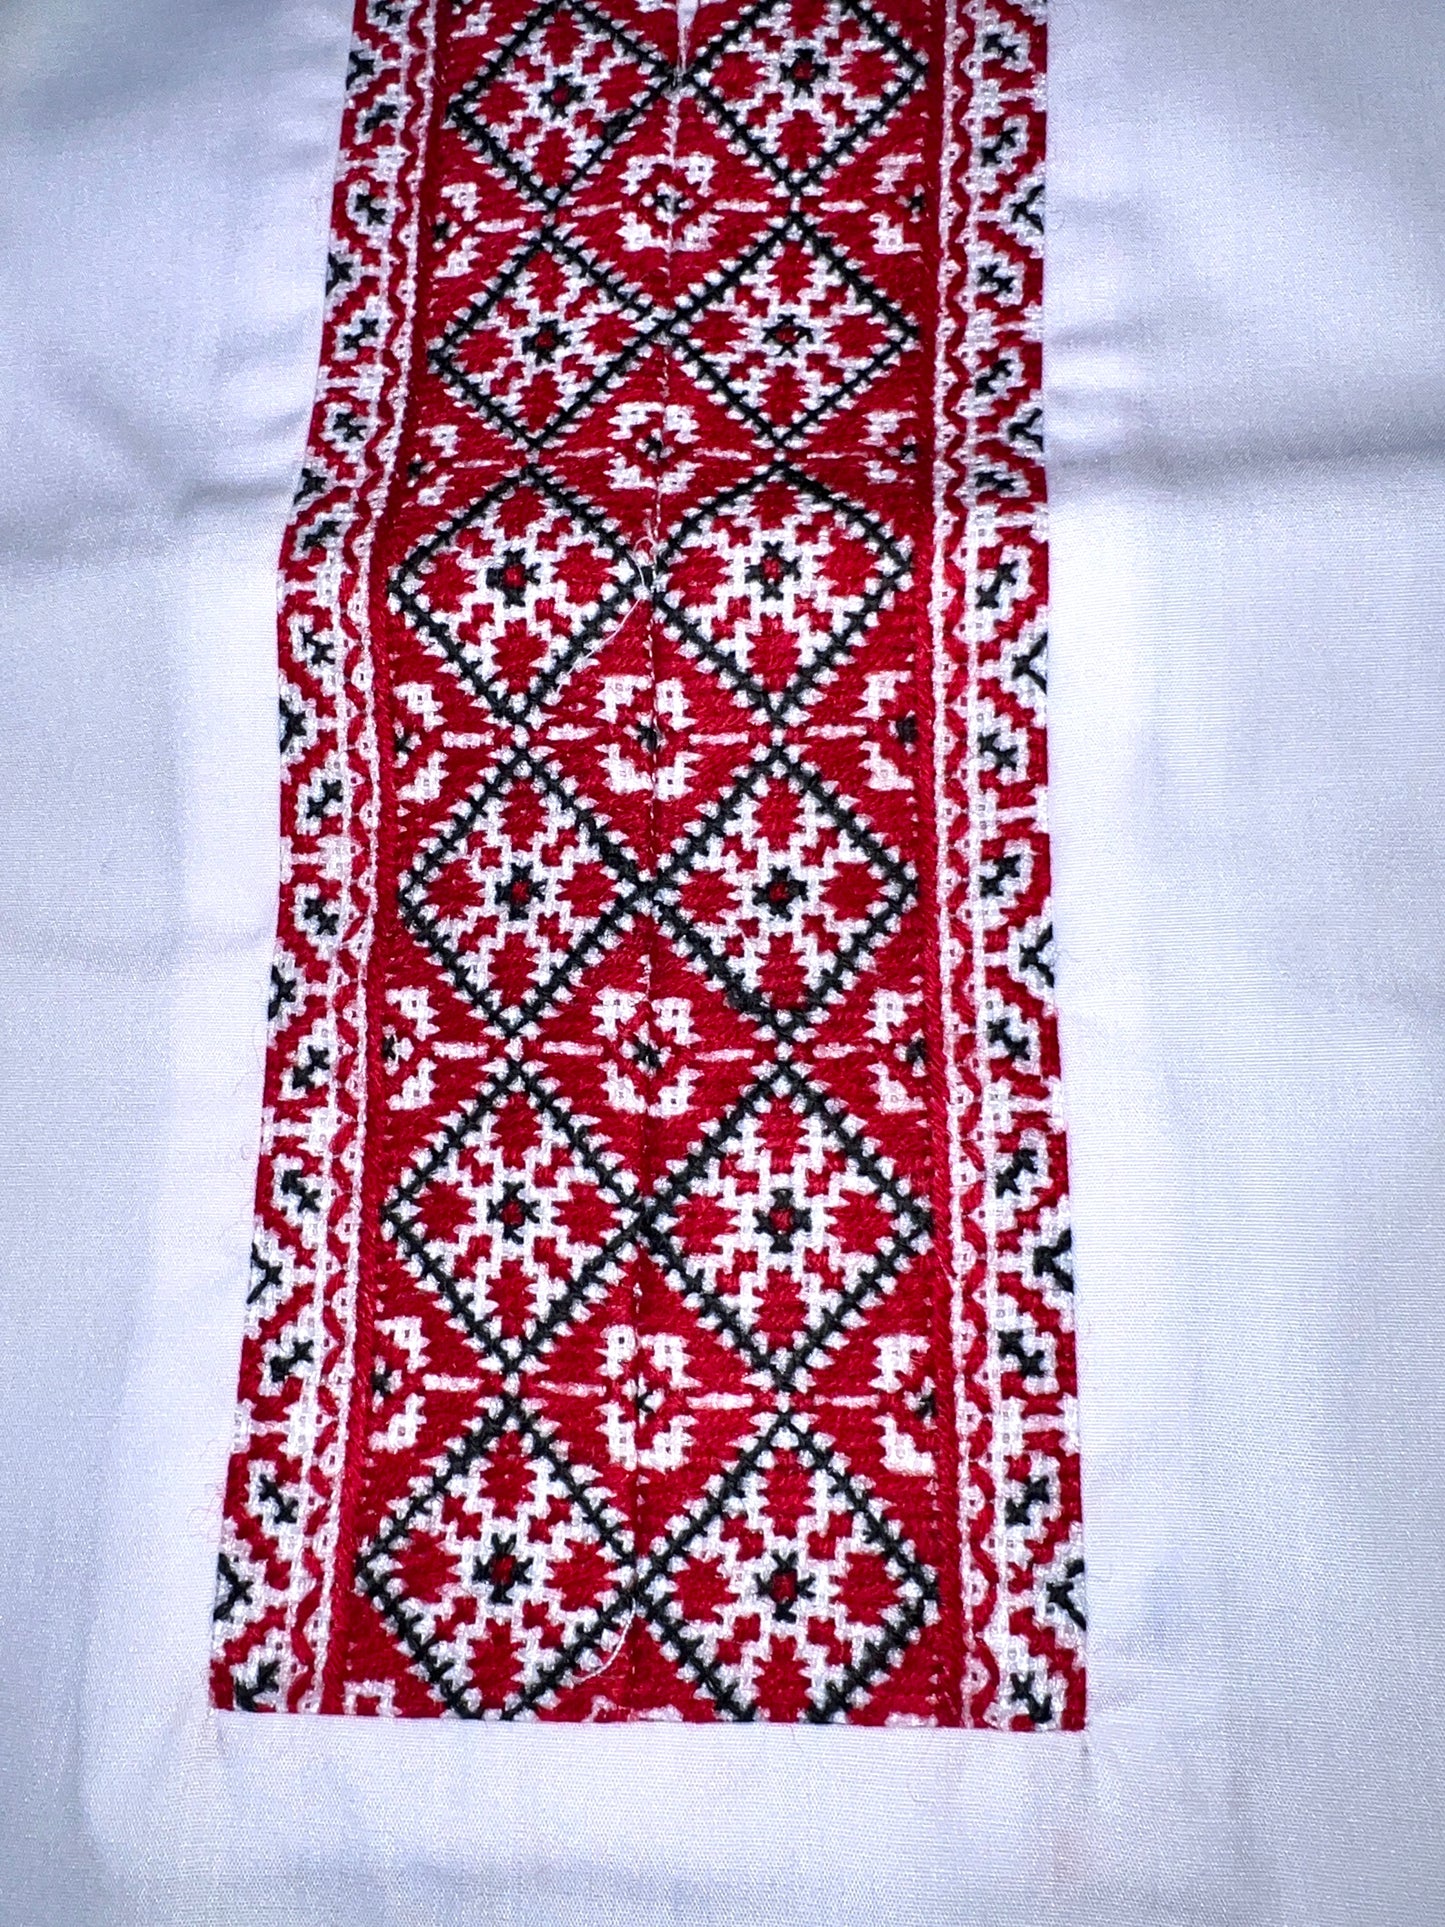 Ukrainian Handmade Embroidered Men's Shirt 1675